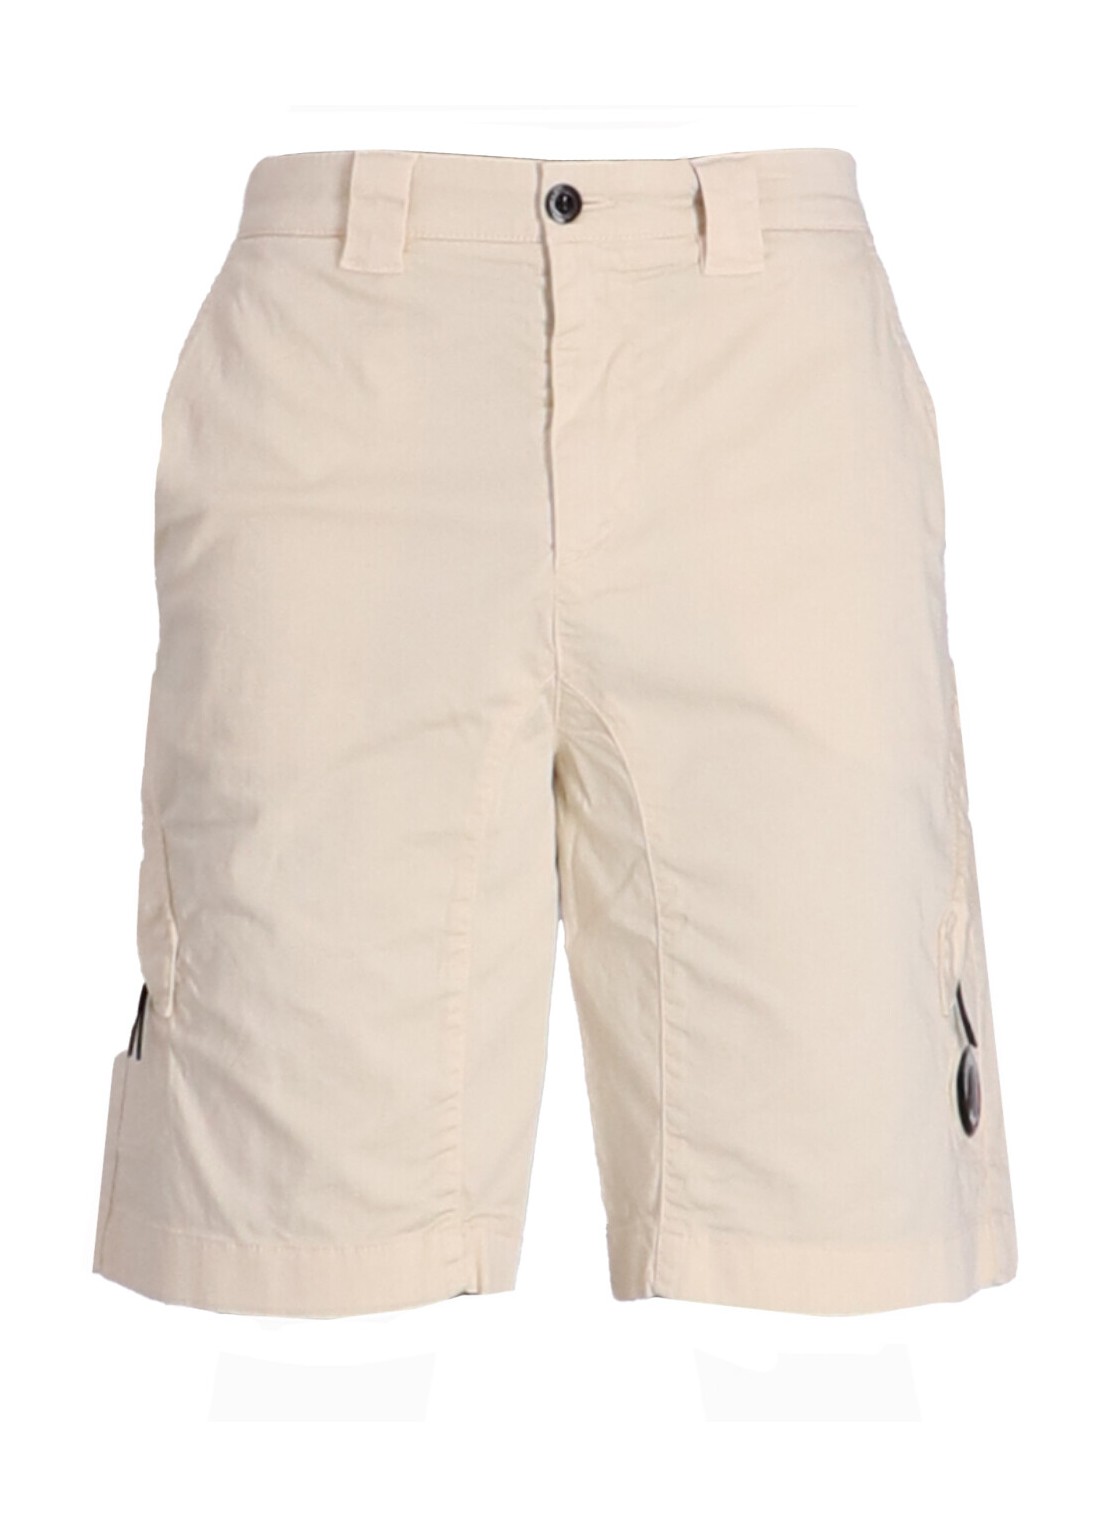 Pantalon corto c.p.company short pant man stretch sateen utility shorts 16cmbe200a005694g 402 talla 